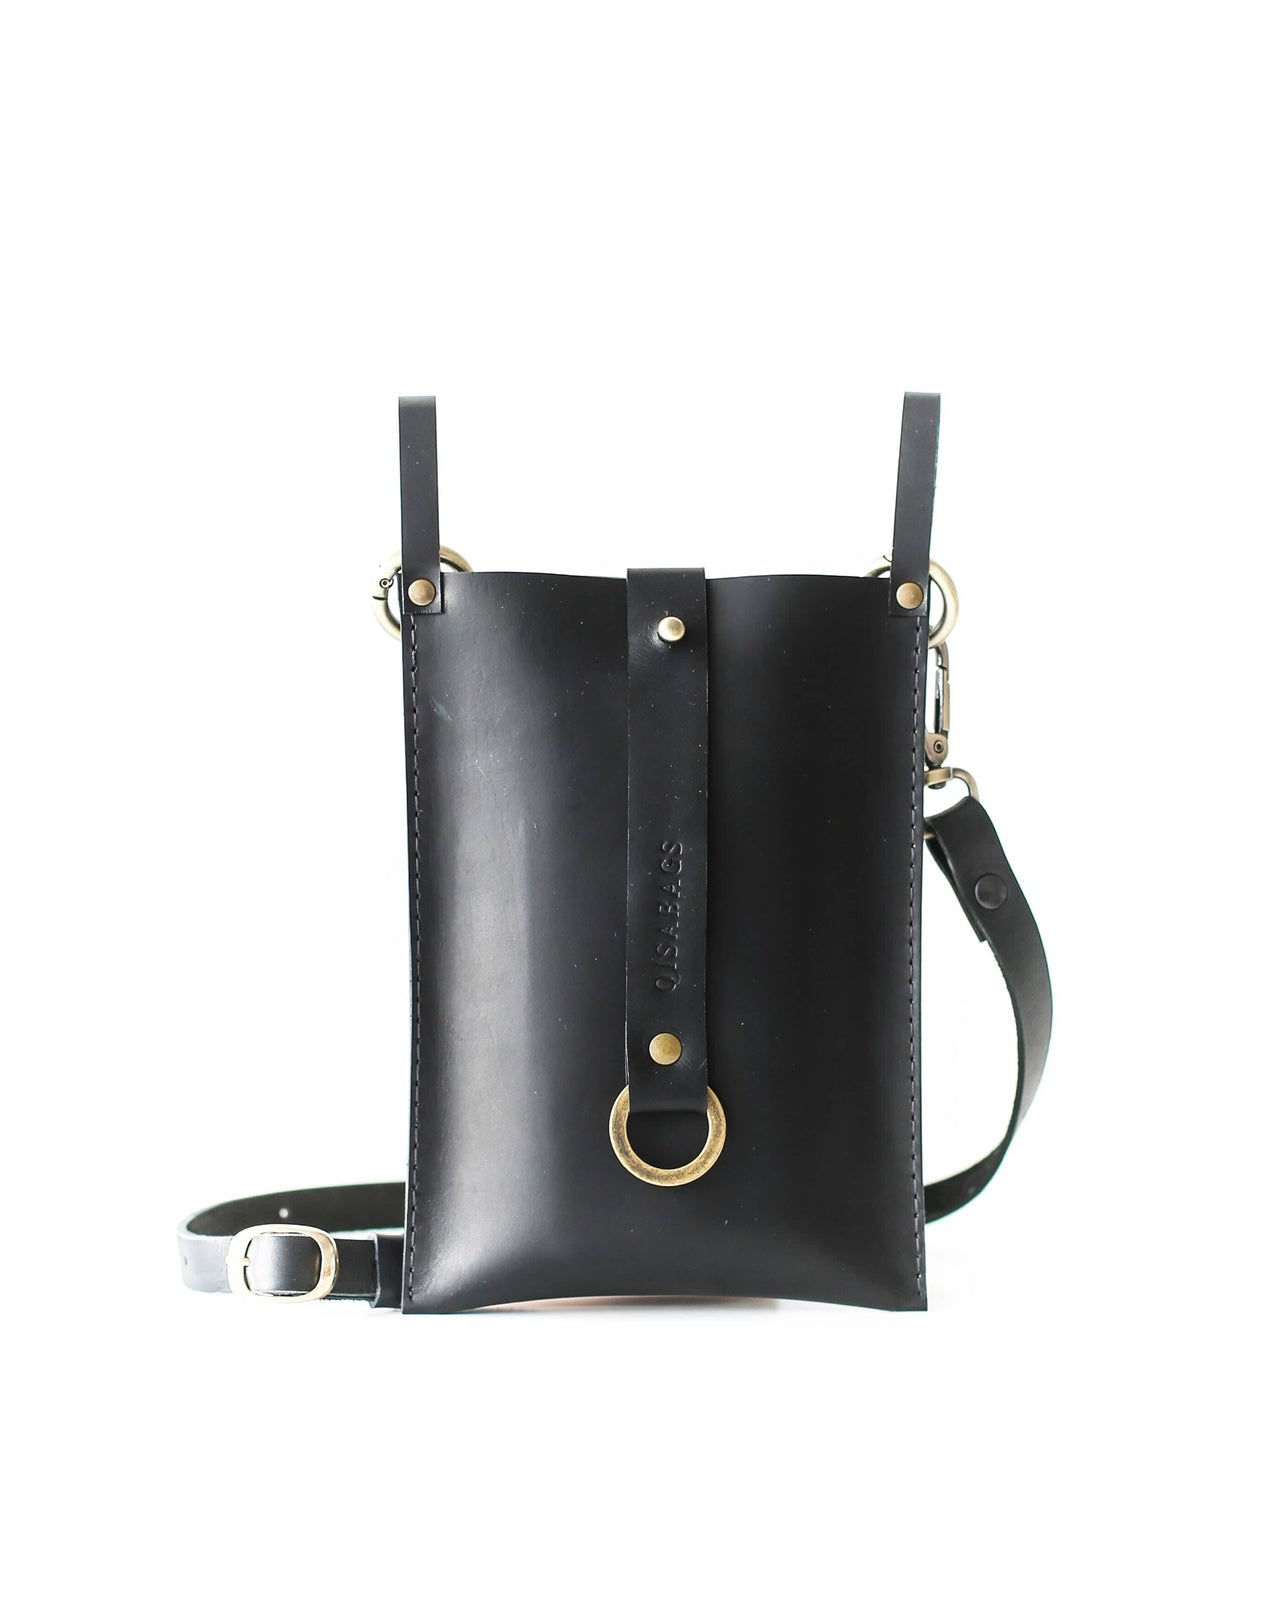 Women's Leather Bags, Luxury Handbags, Crossbody Bag, Phone Bag